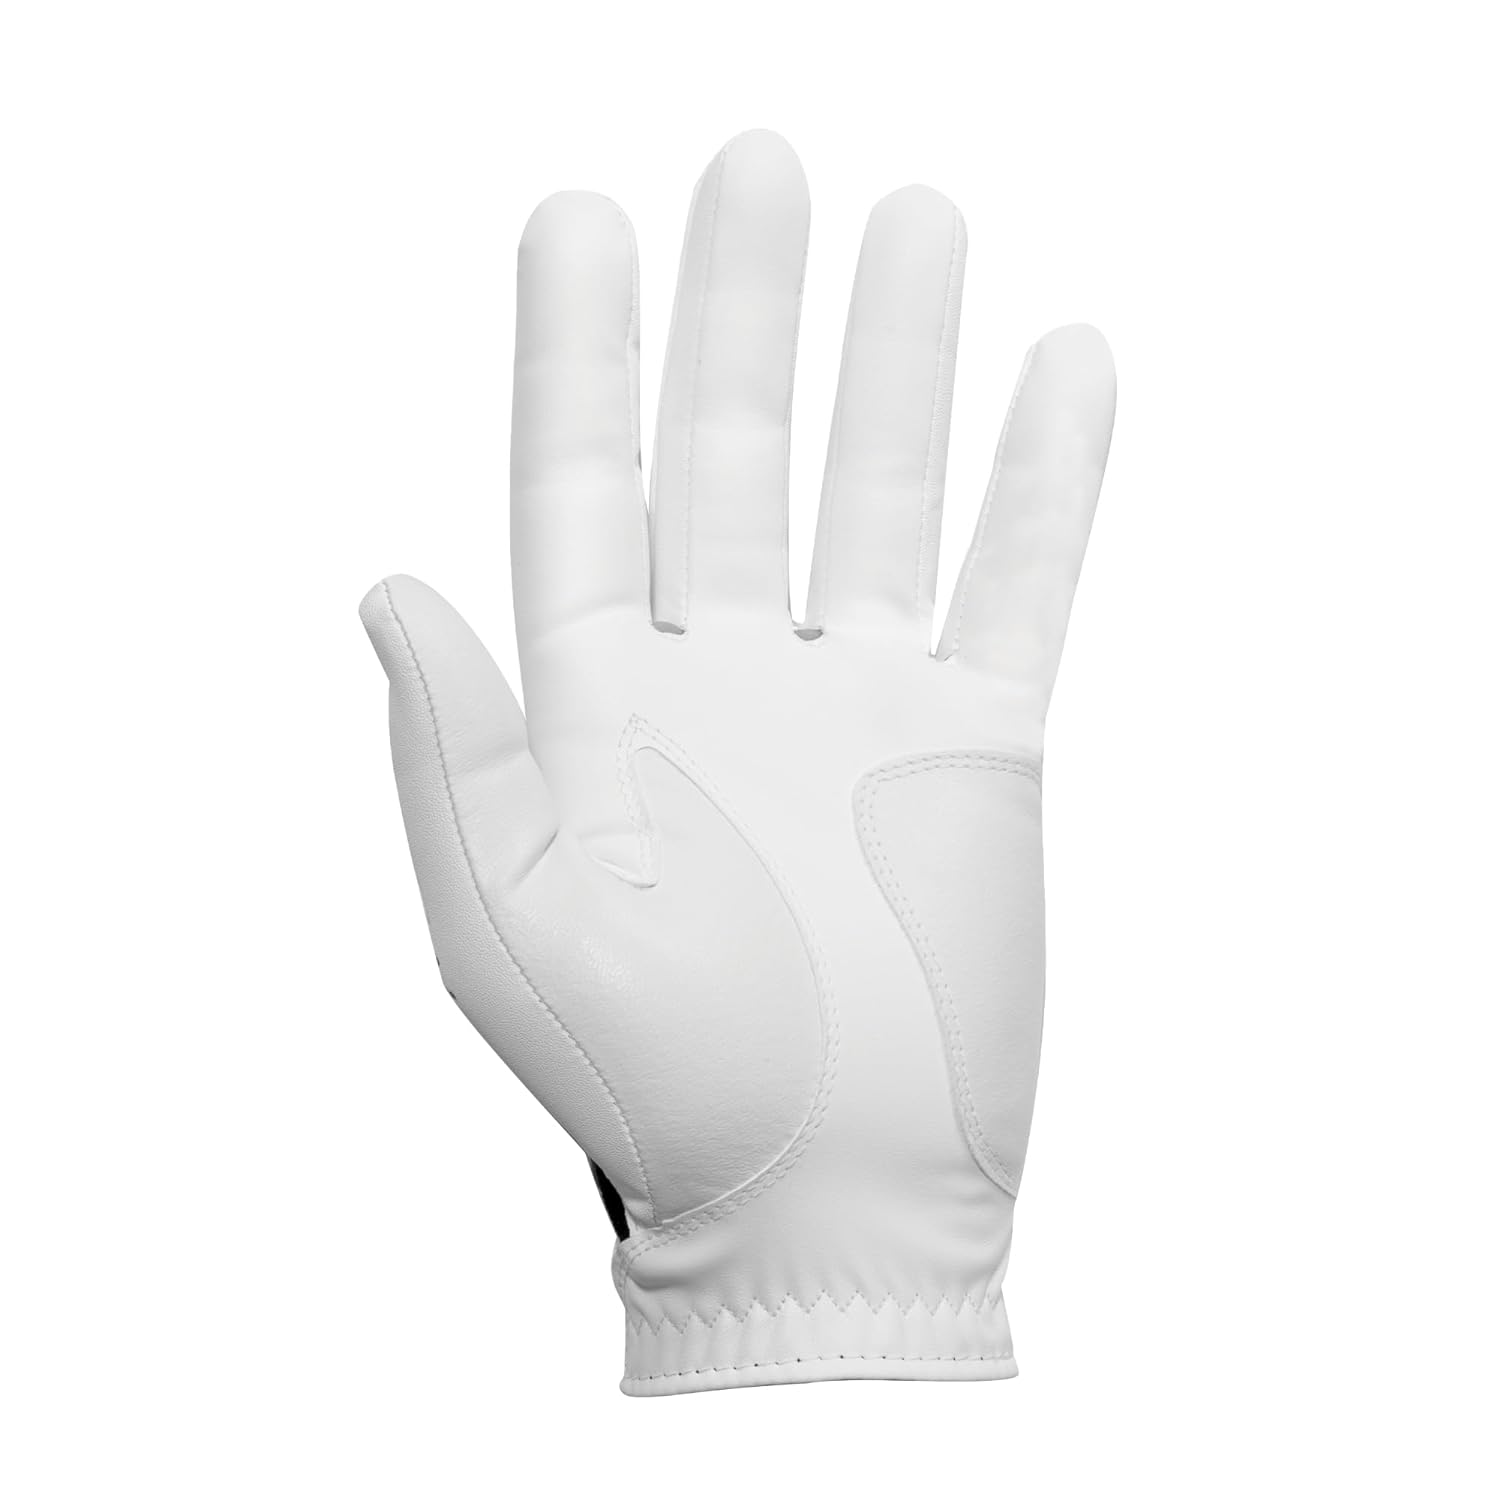 FootJoy Men's WeatherSof 2-Pack Golf Glove, White, Medium/Large, Worn on Right Hand